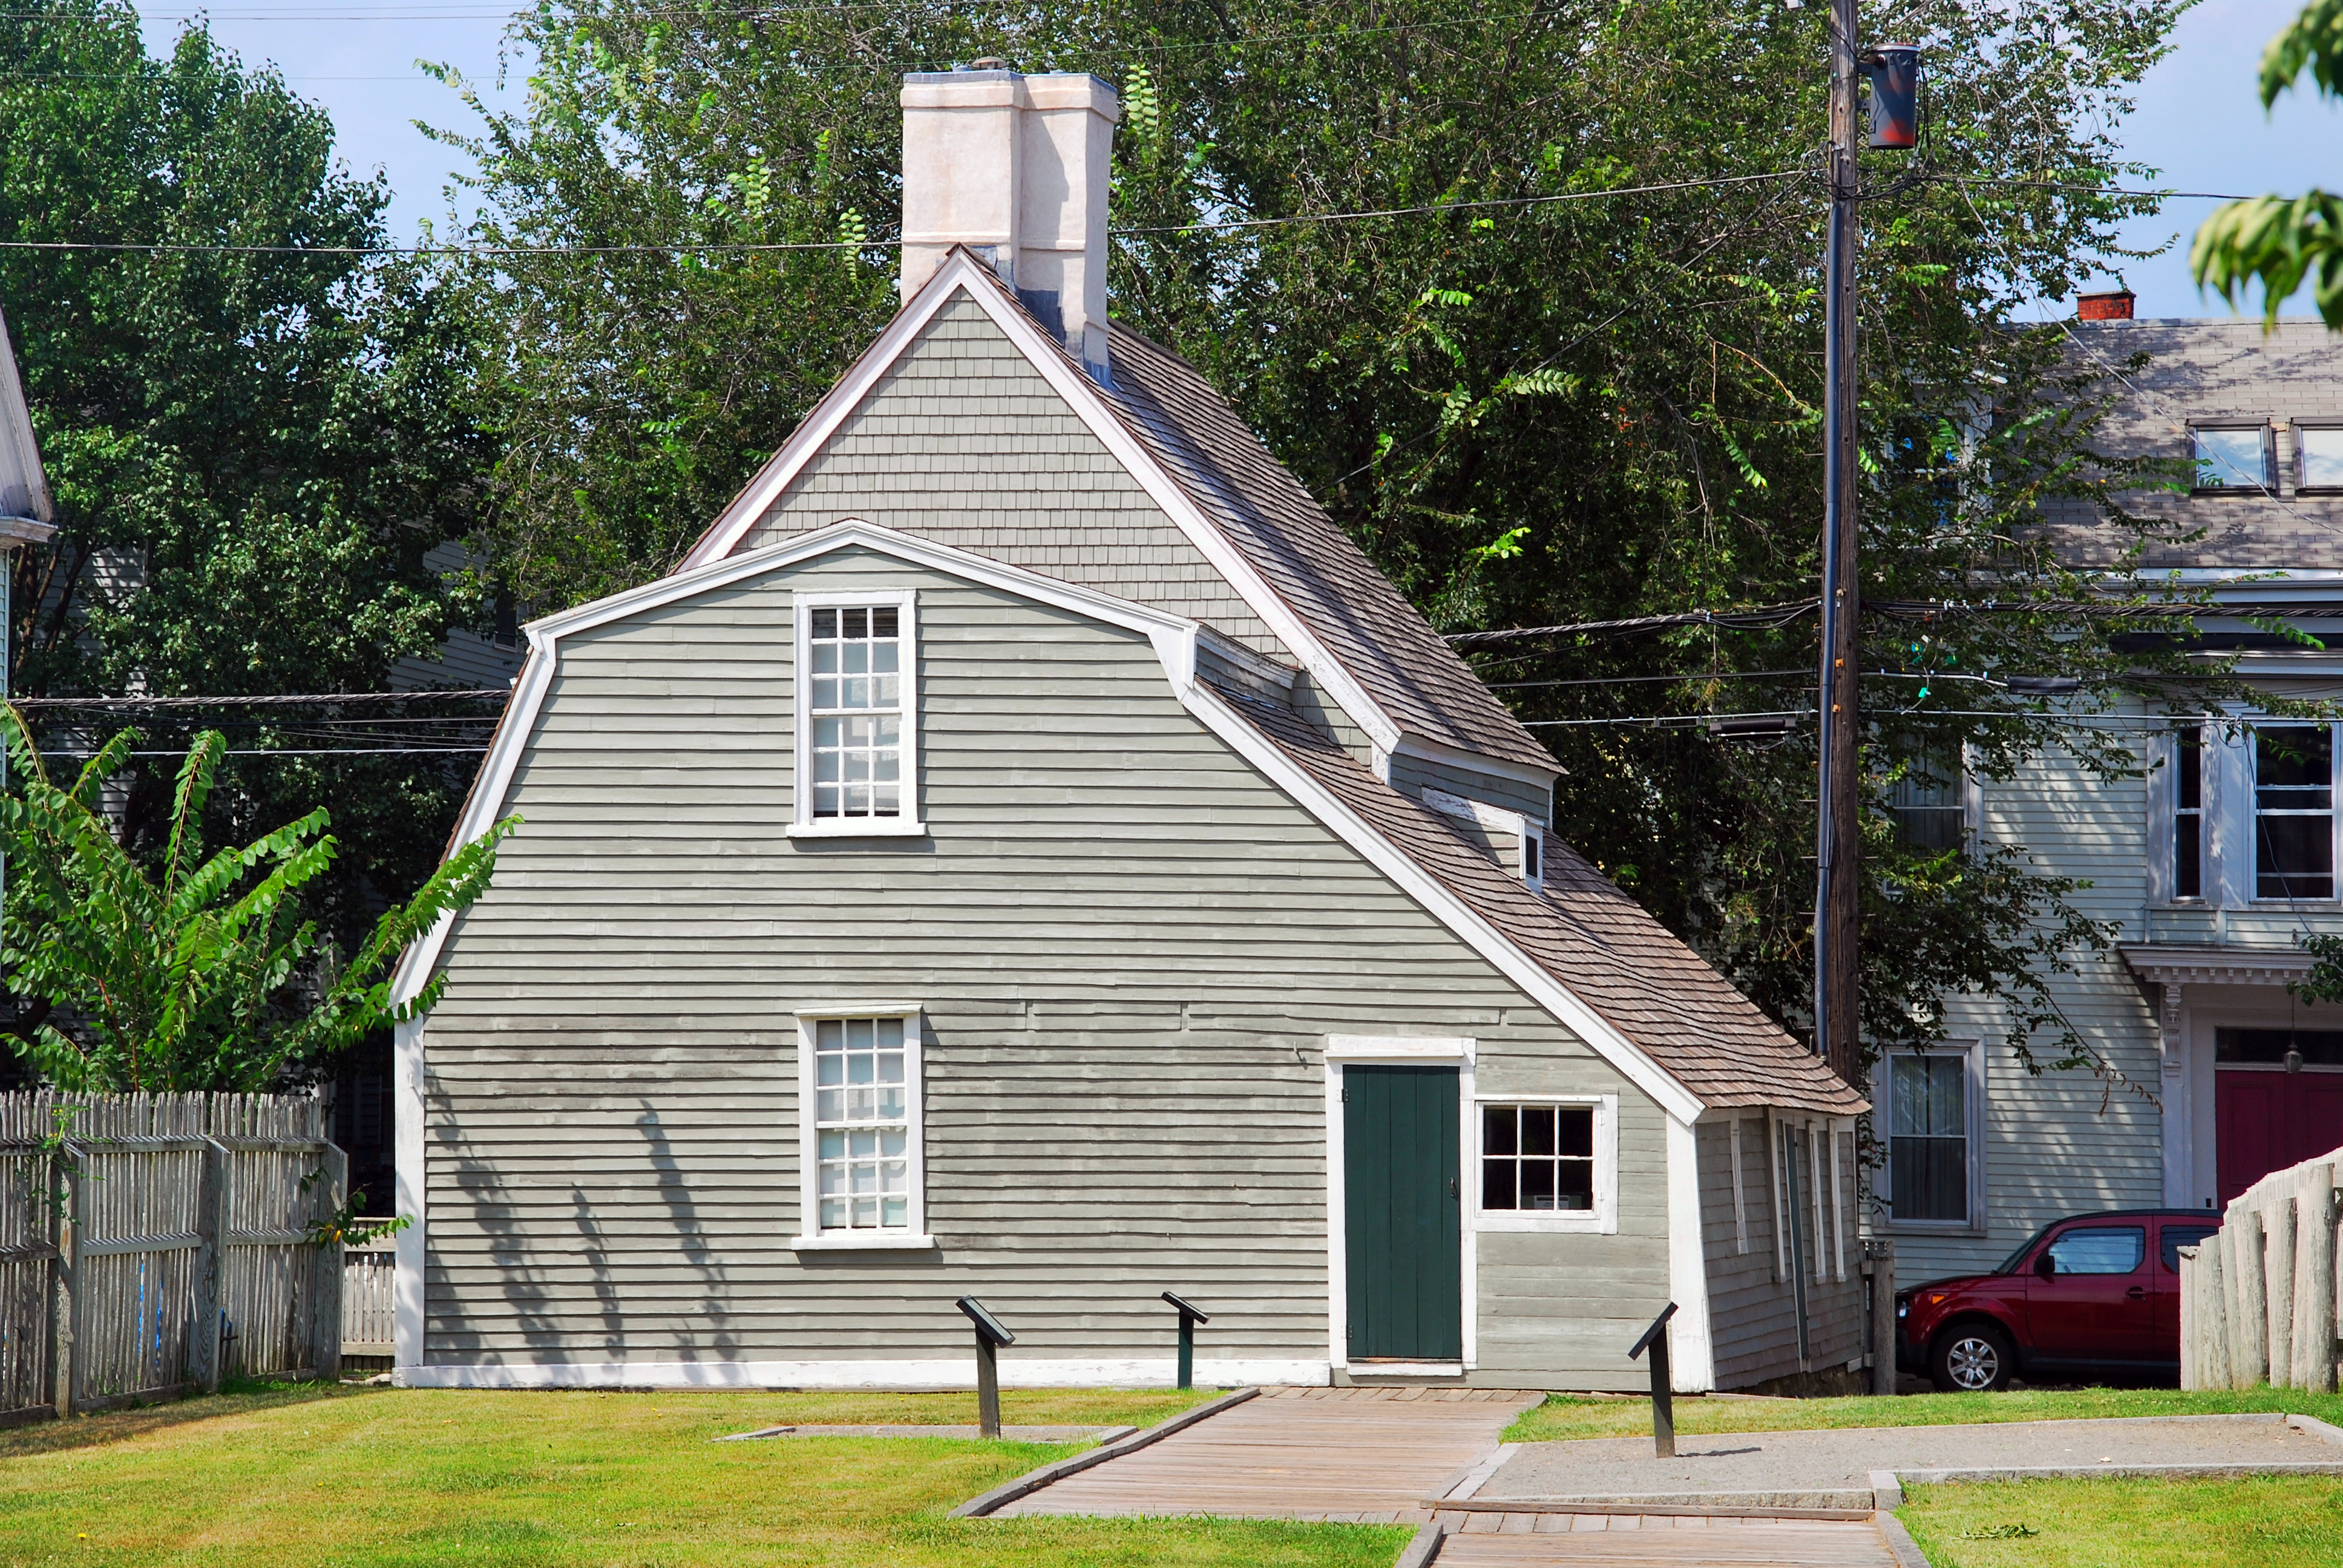 File:Salem middle class house.JPG - Wikimedia Commons